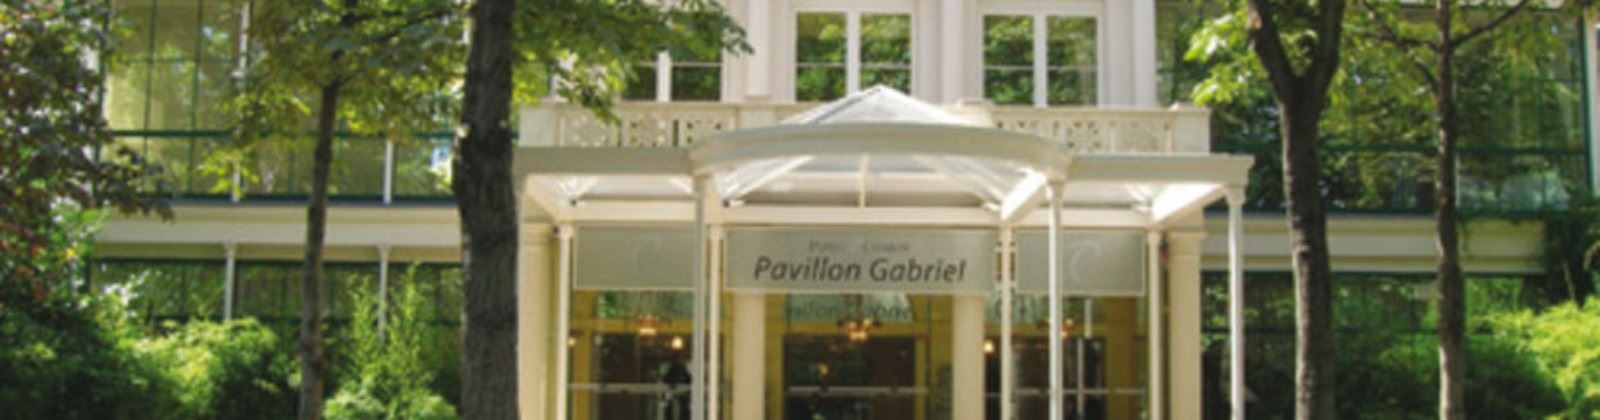 OLEVENE image - pavillon-gabriel-olevene-restaurant-hotel-evenements-